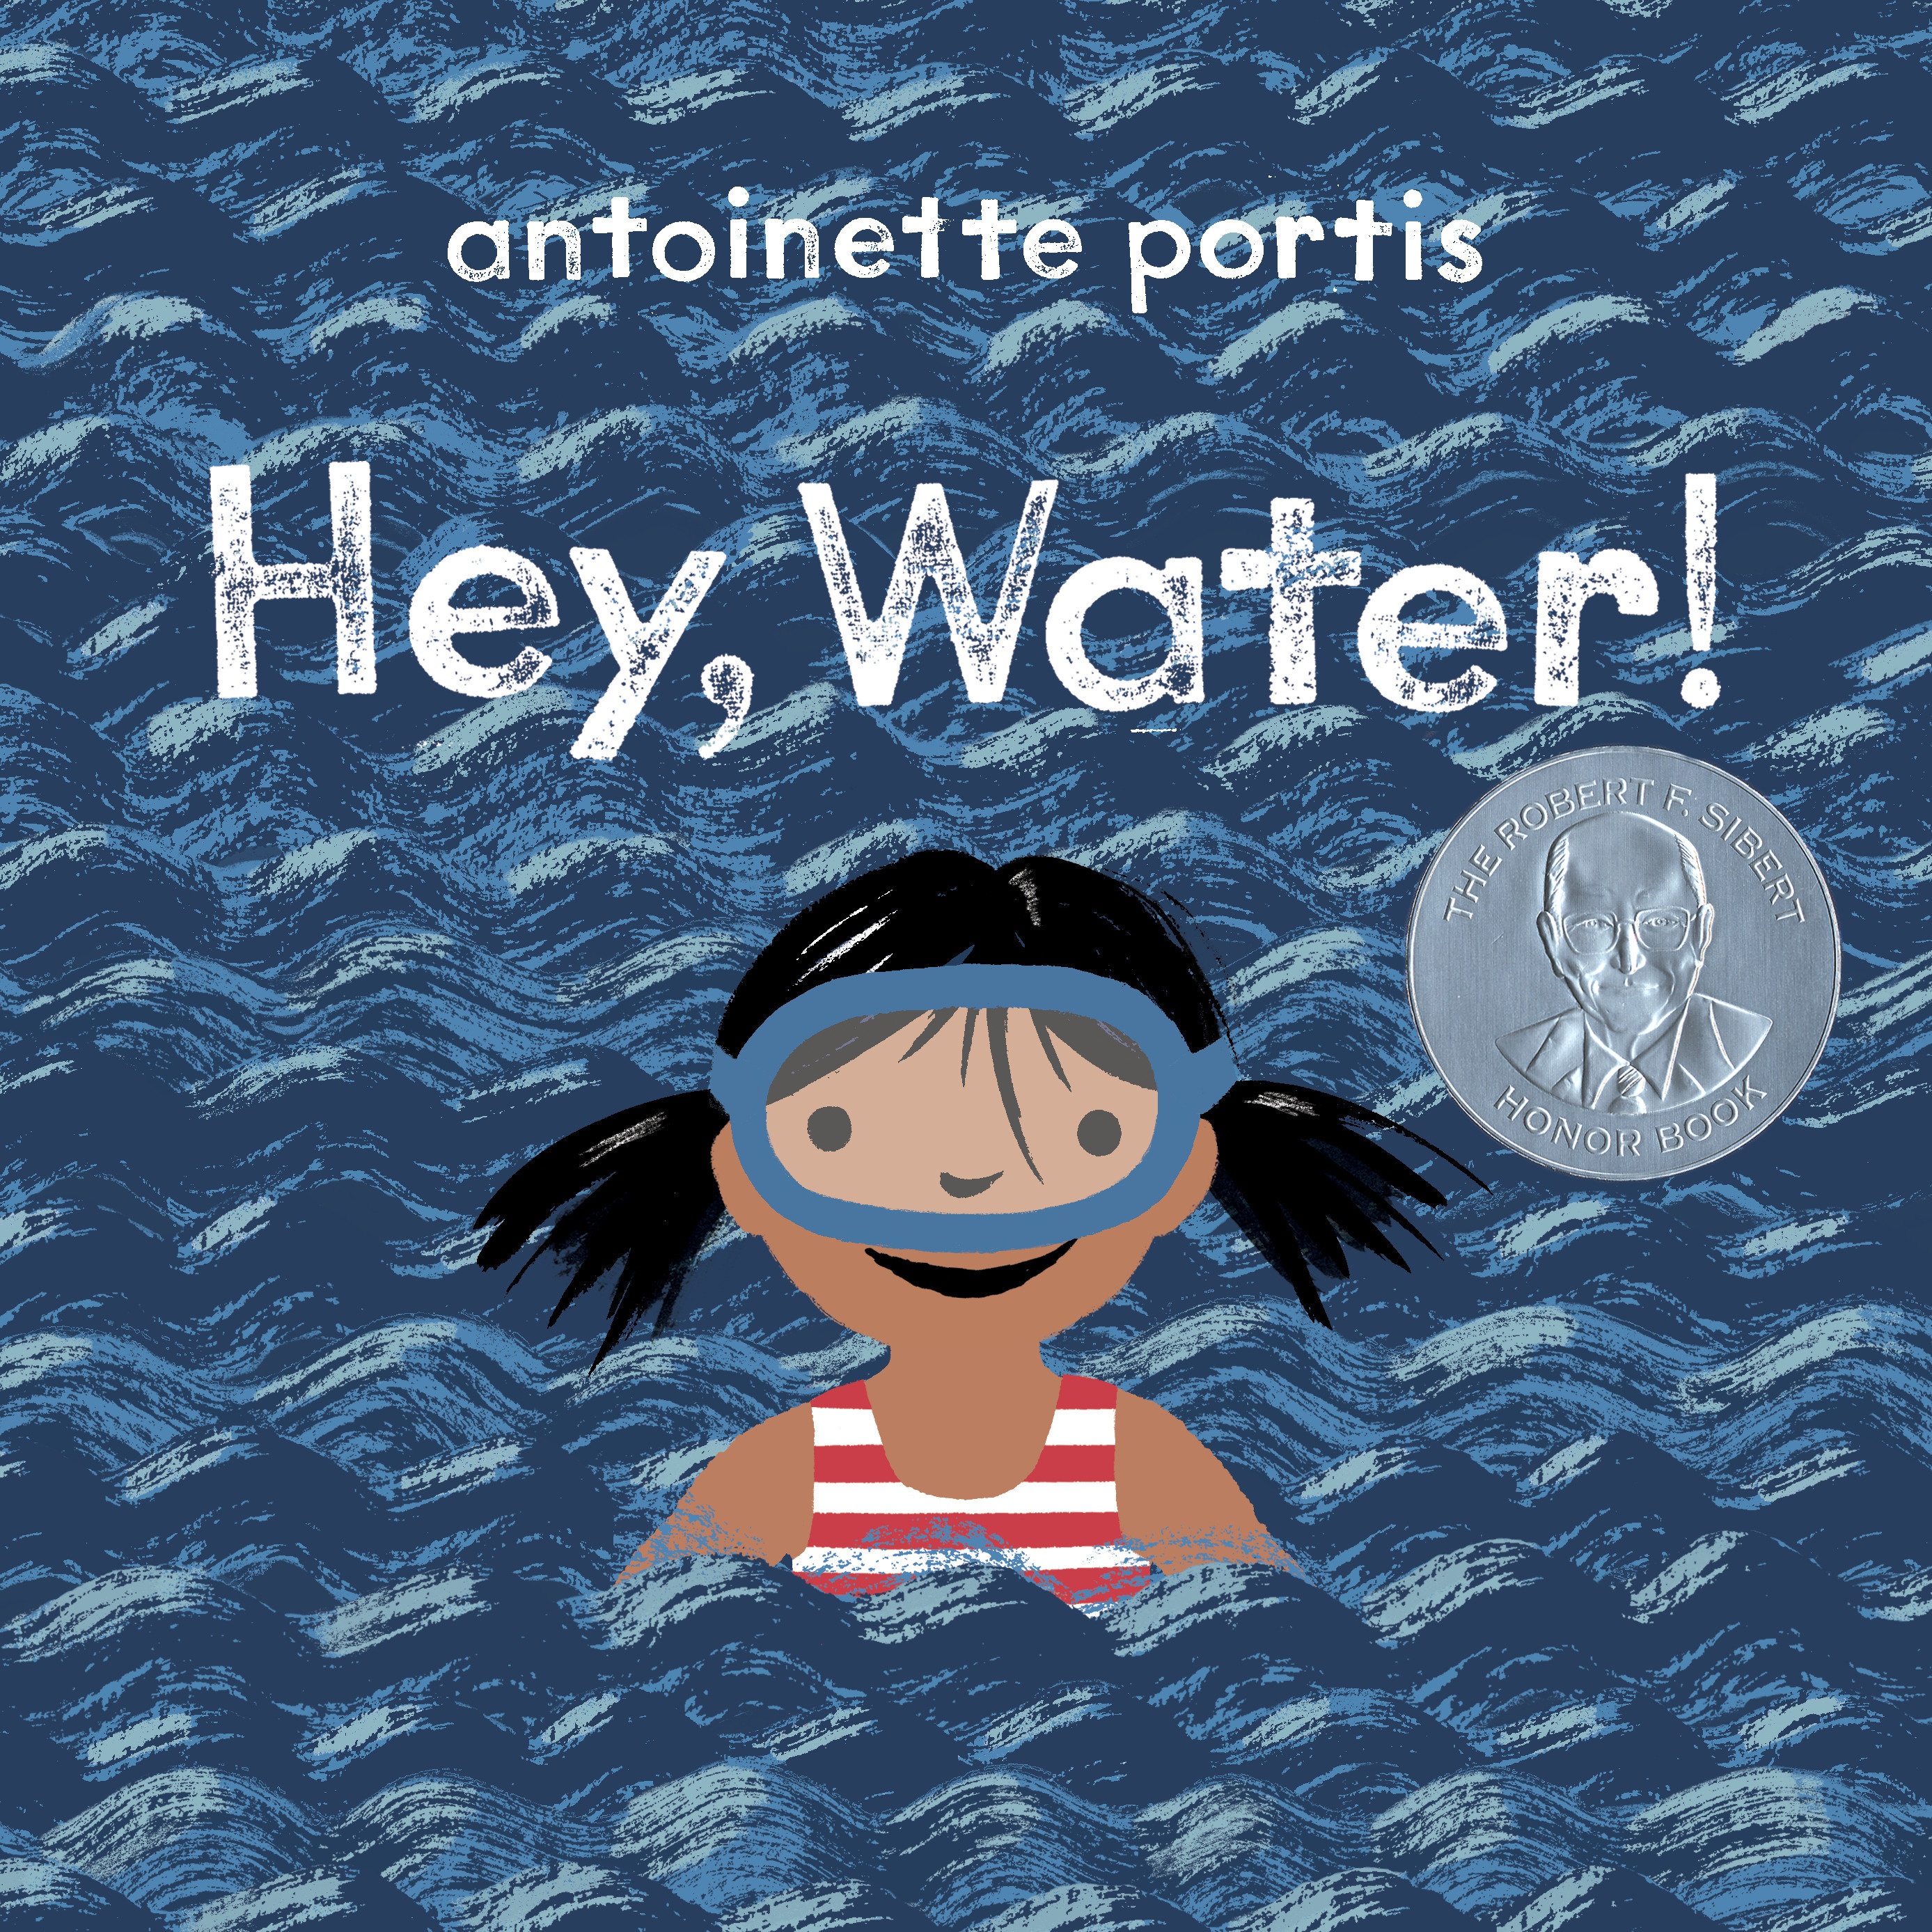 Hey, Water! (Hardcover Book)